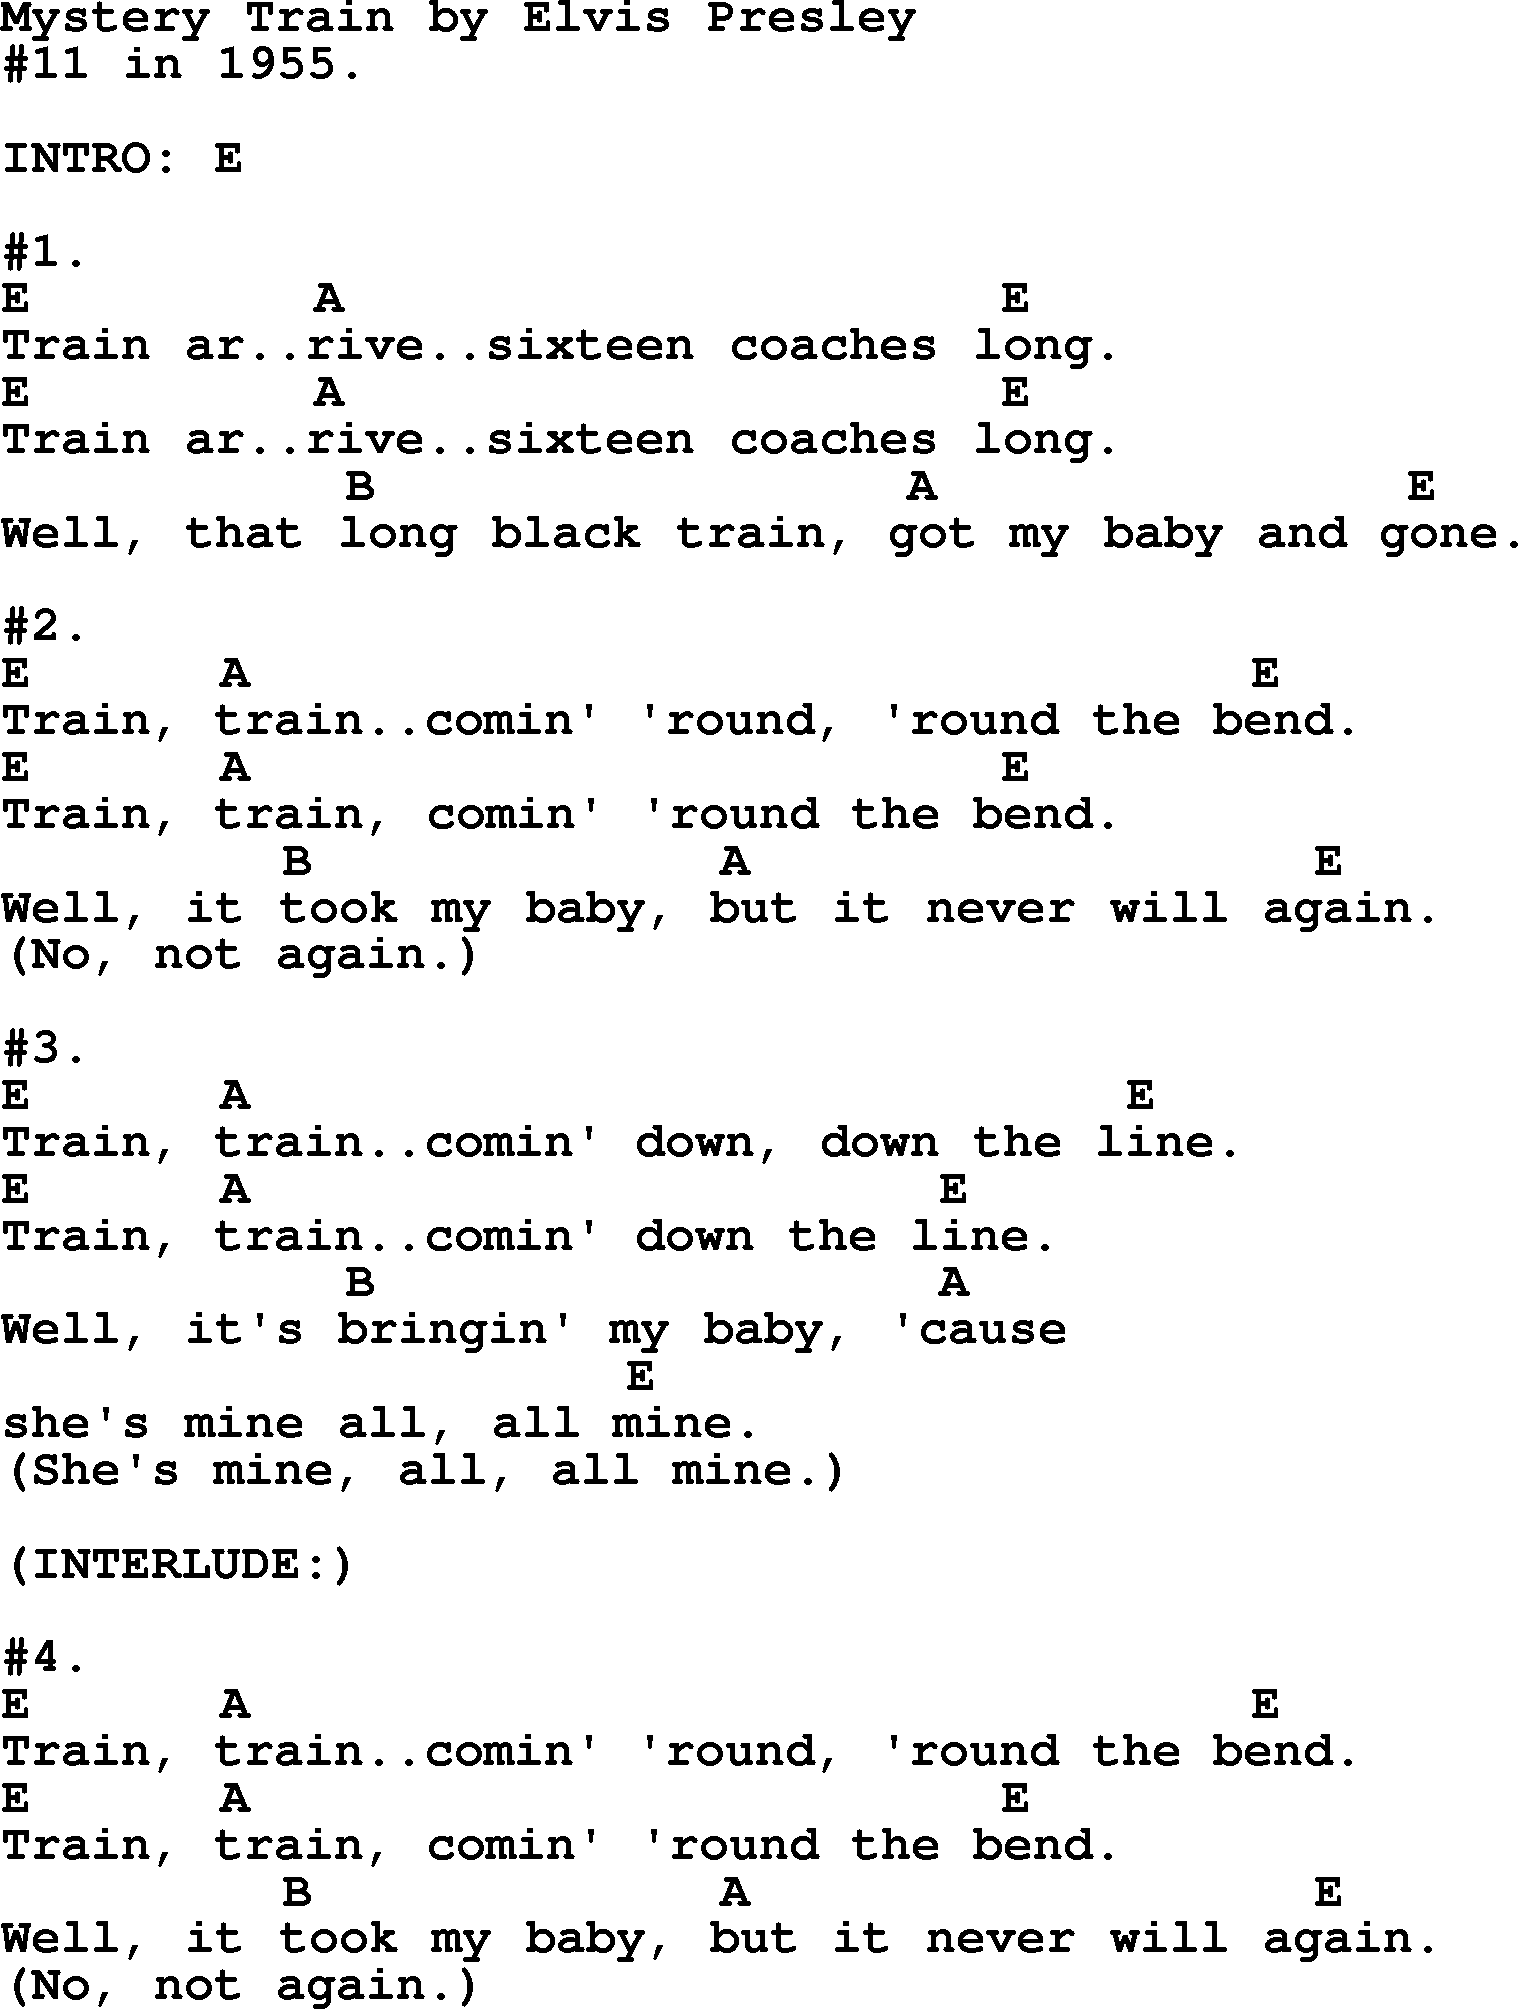 Elvis Presley song: Mystery Train, lyrics and chords